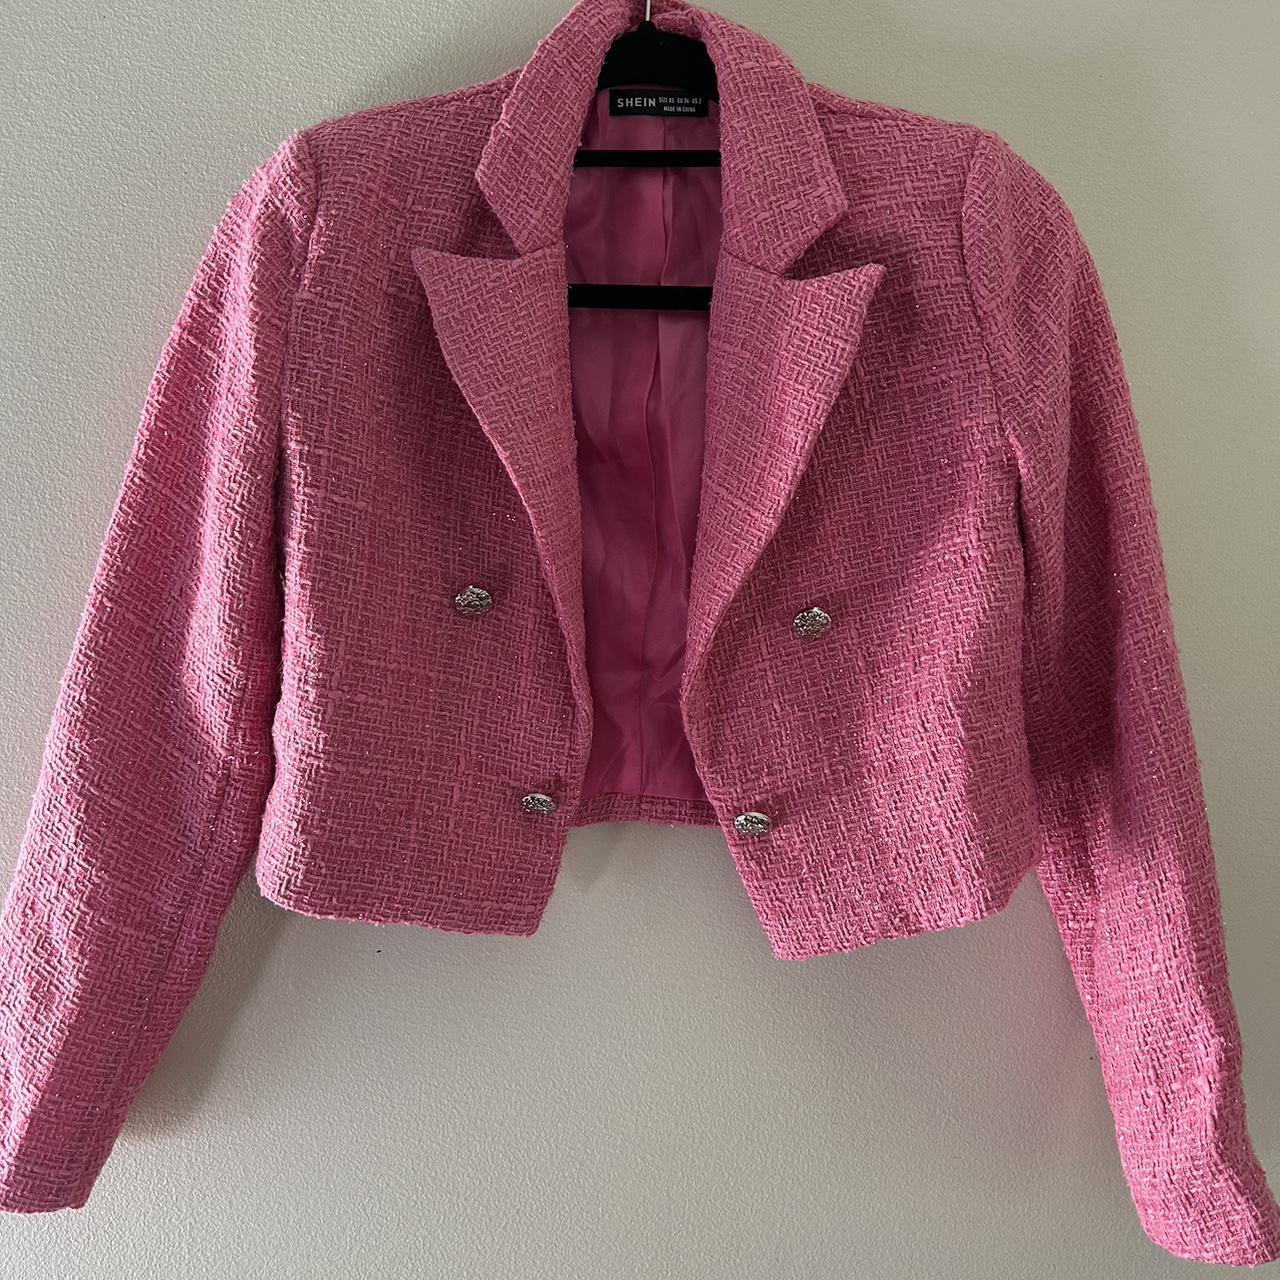 SHEIN Women's Pink Suit (2)